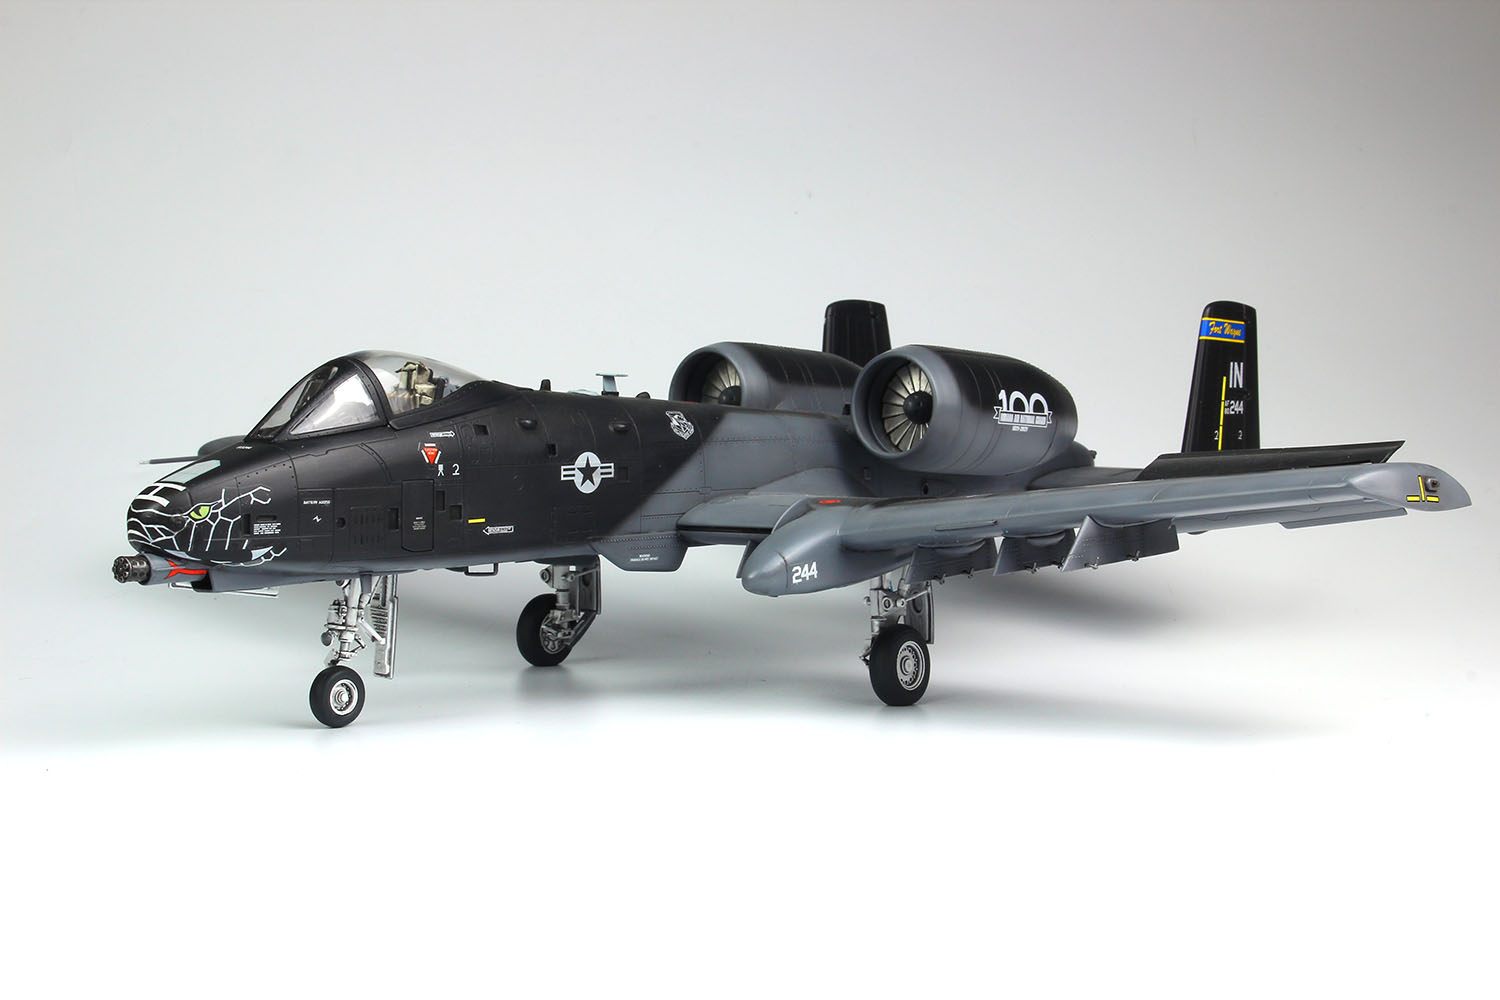 PLATZ 1/48 USAF Attack Aircraft A-10C Thunderbolt II Blacksnake